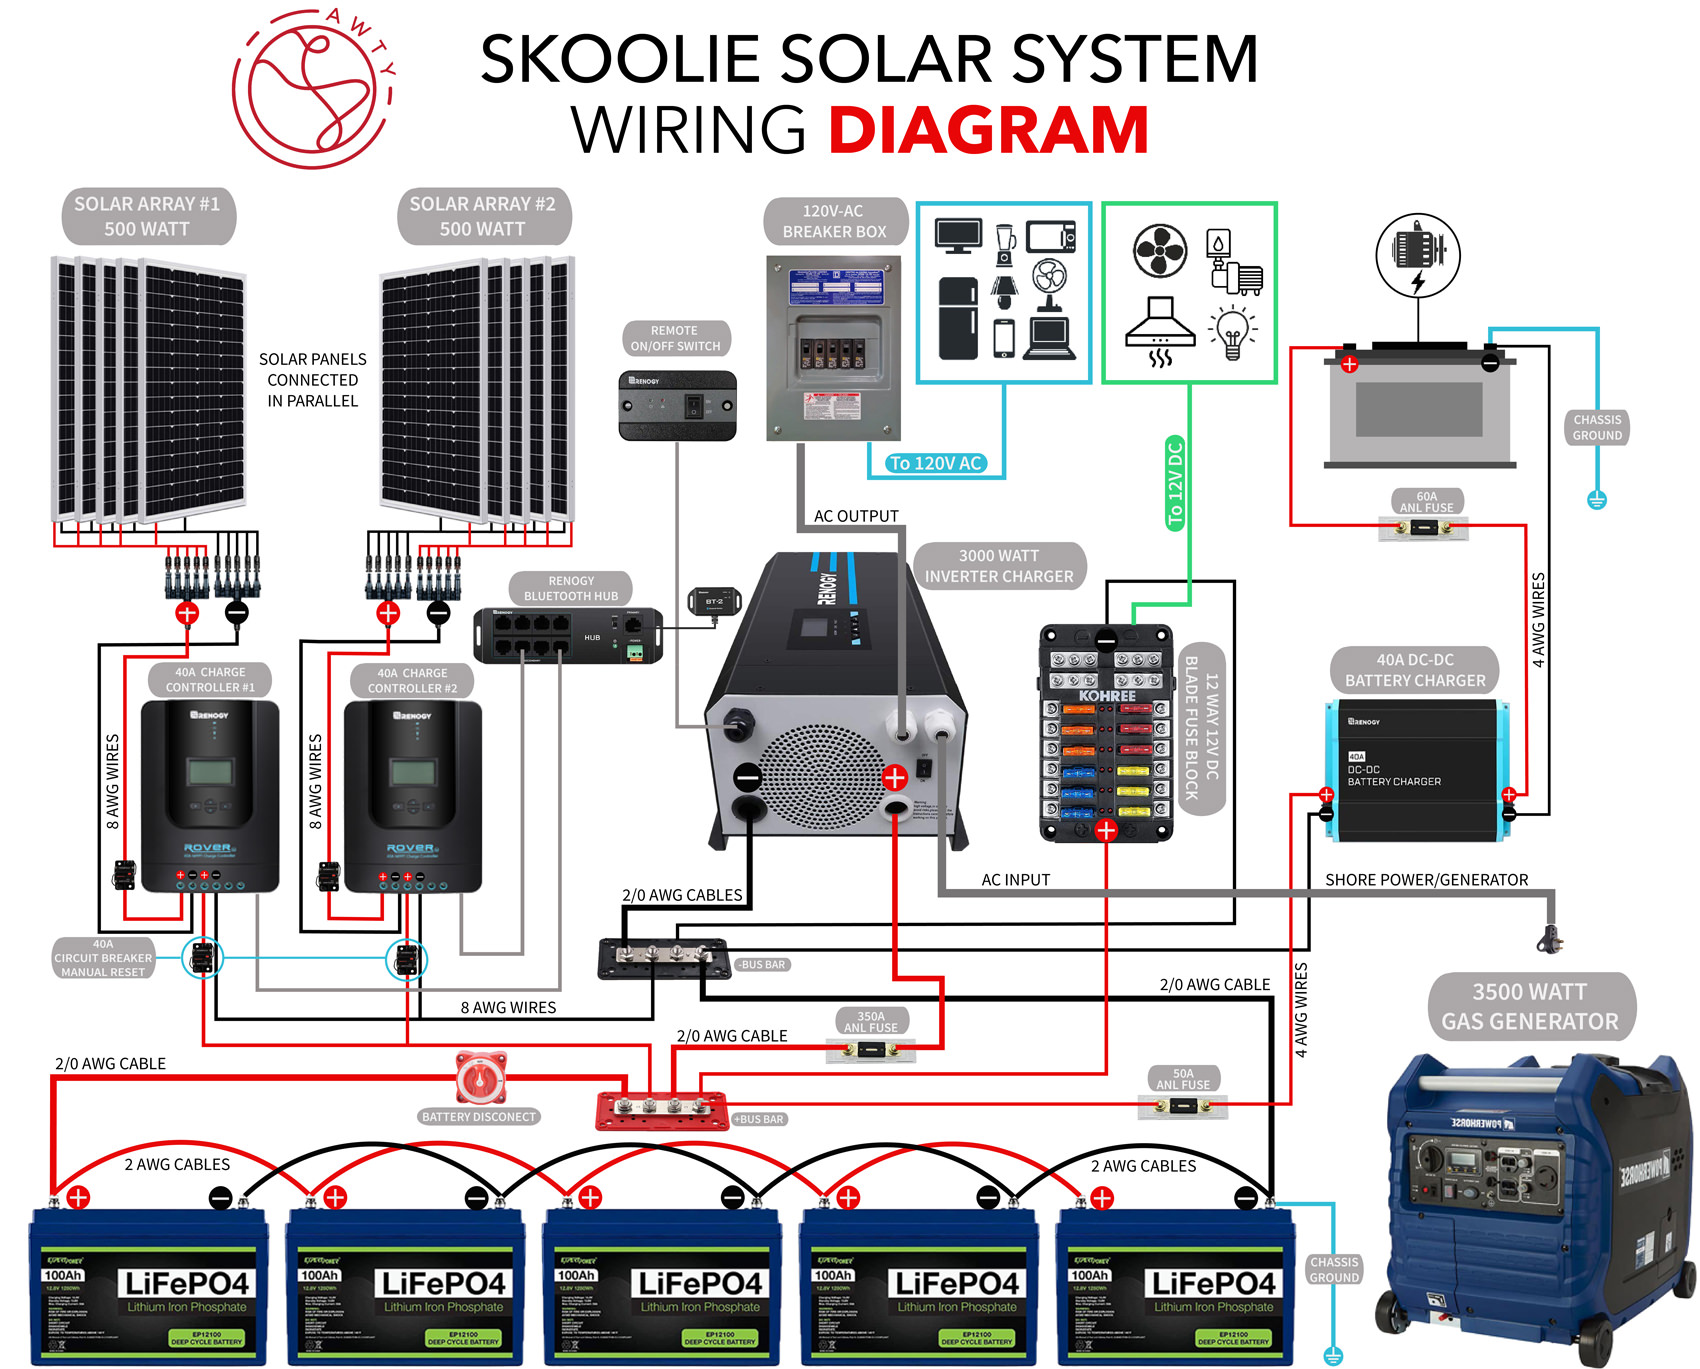 https://artwethereyet.com/blog/wp-content/uploads/2021/03/skoolie-solar-system-wiring-diagram.jpg